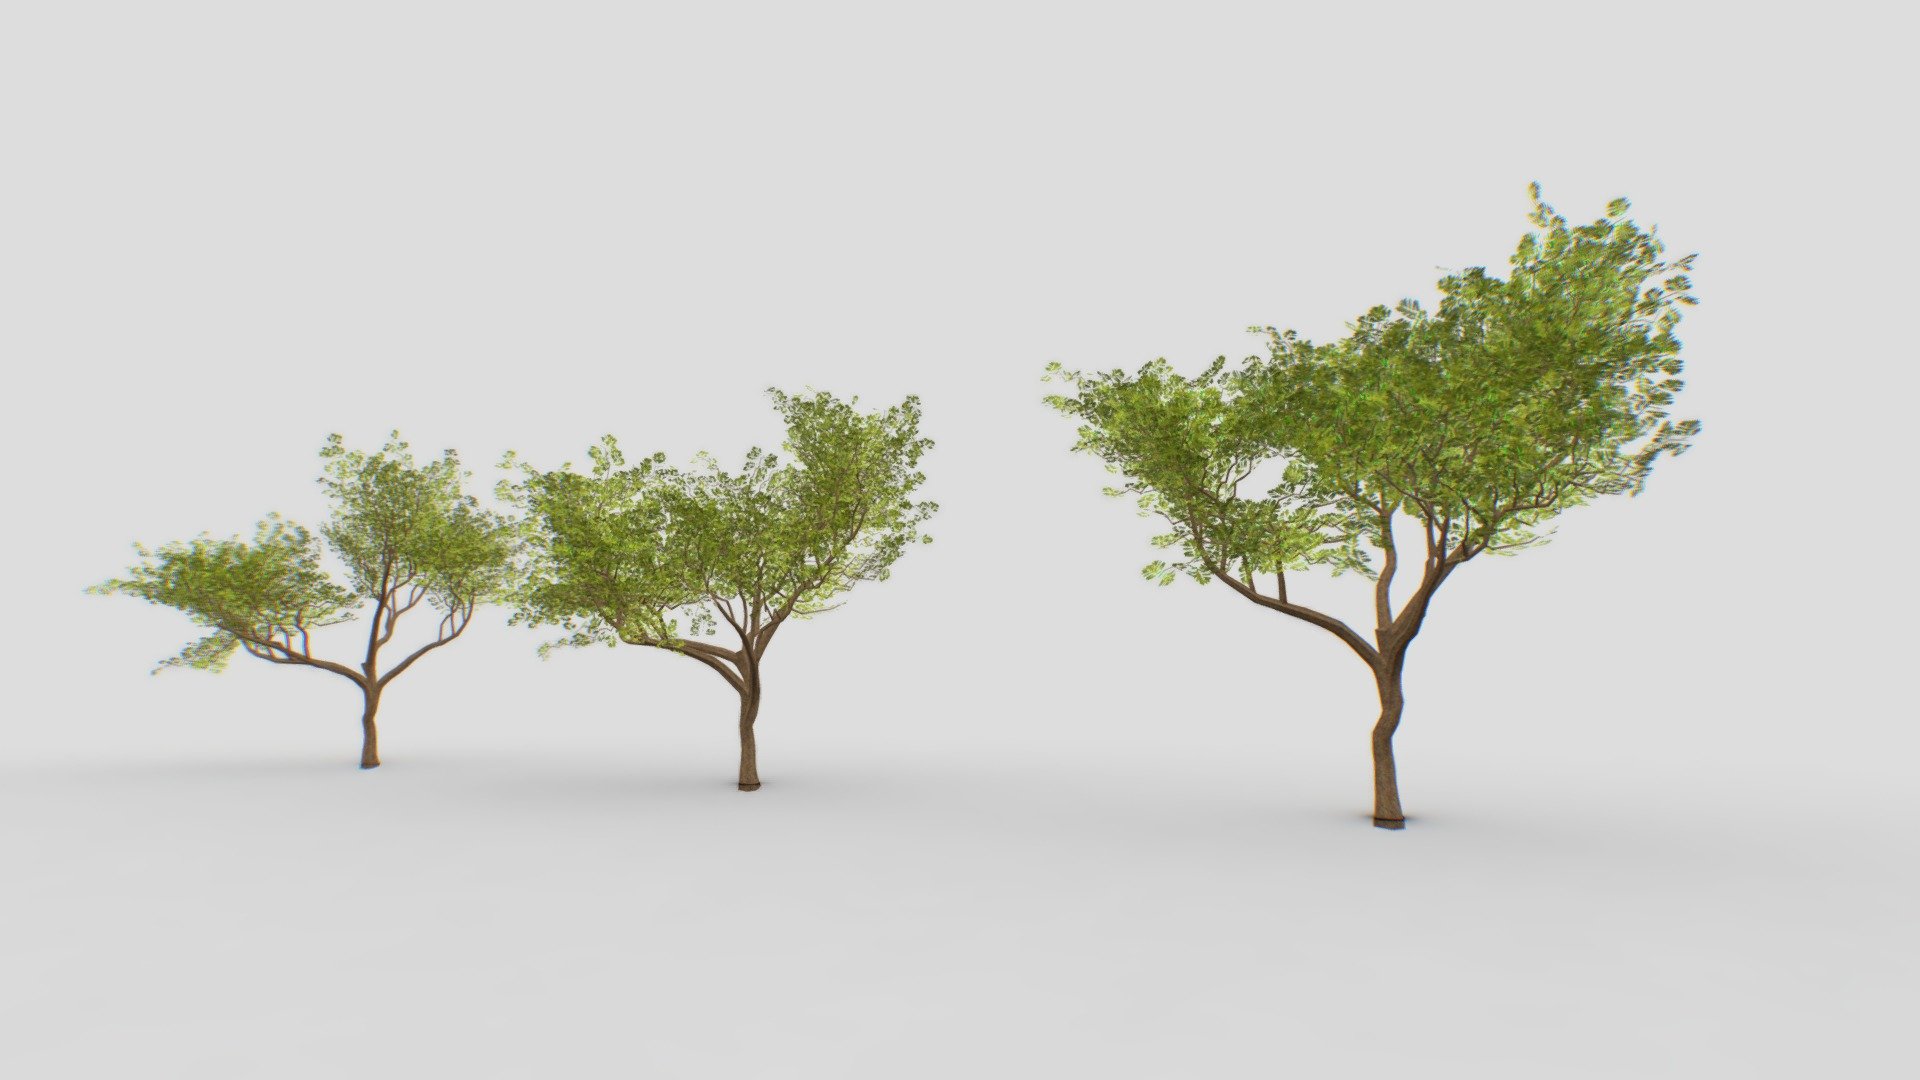 Acacia tree
About 2.0 - 2.5 mb 1 tree - Acacia tree - Buy Royalty Free 3D model by VRA (@architect47) 3d model